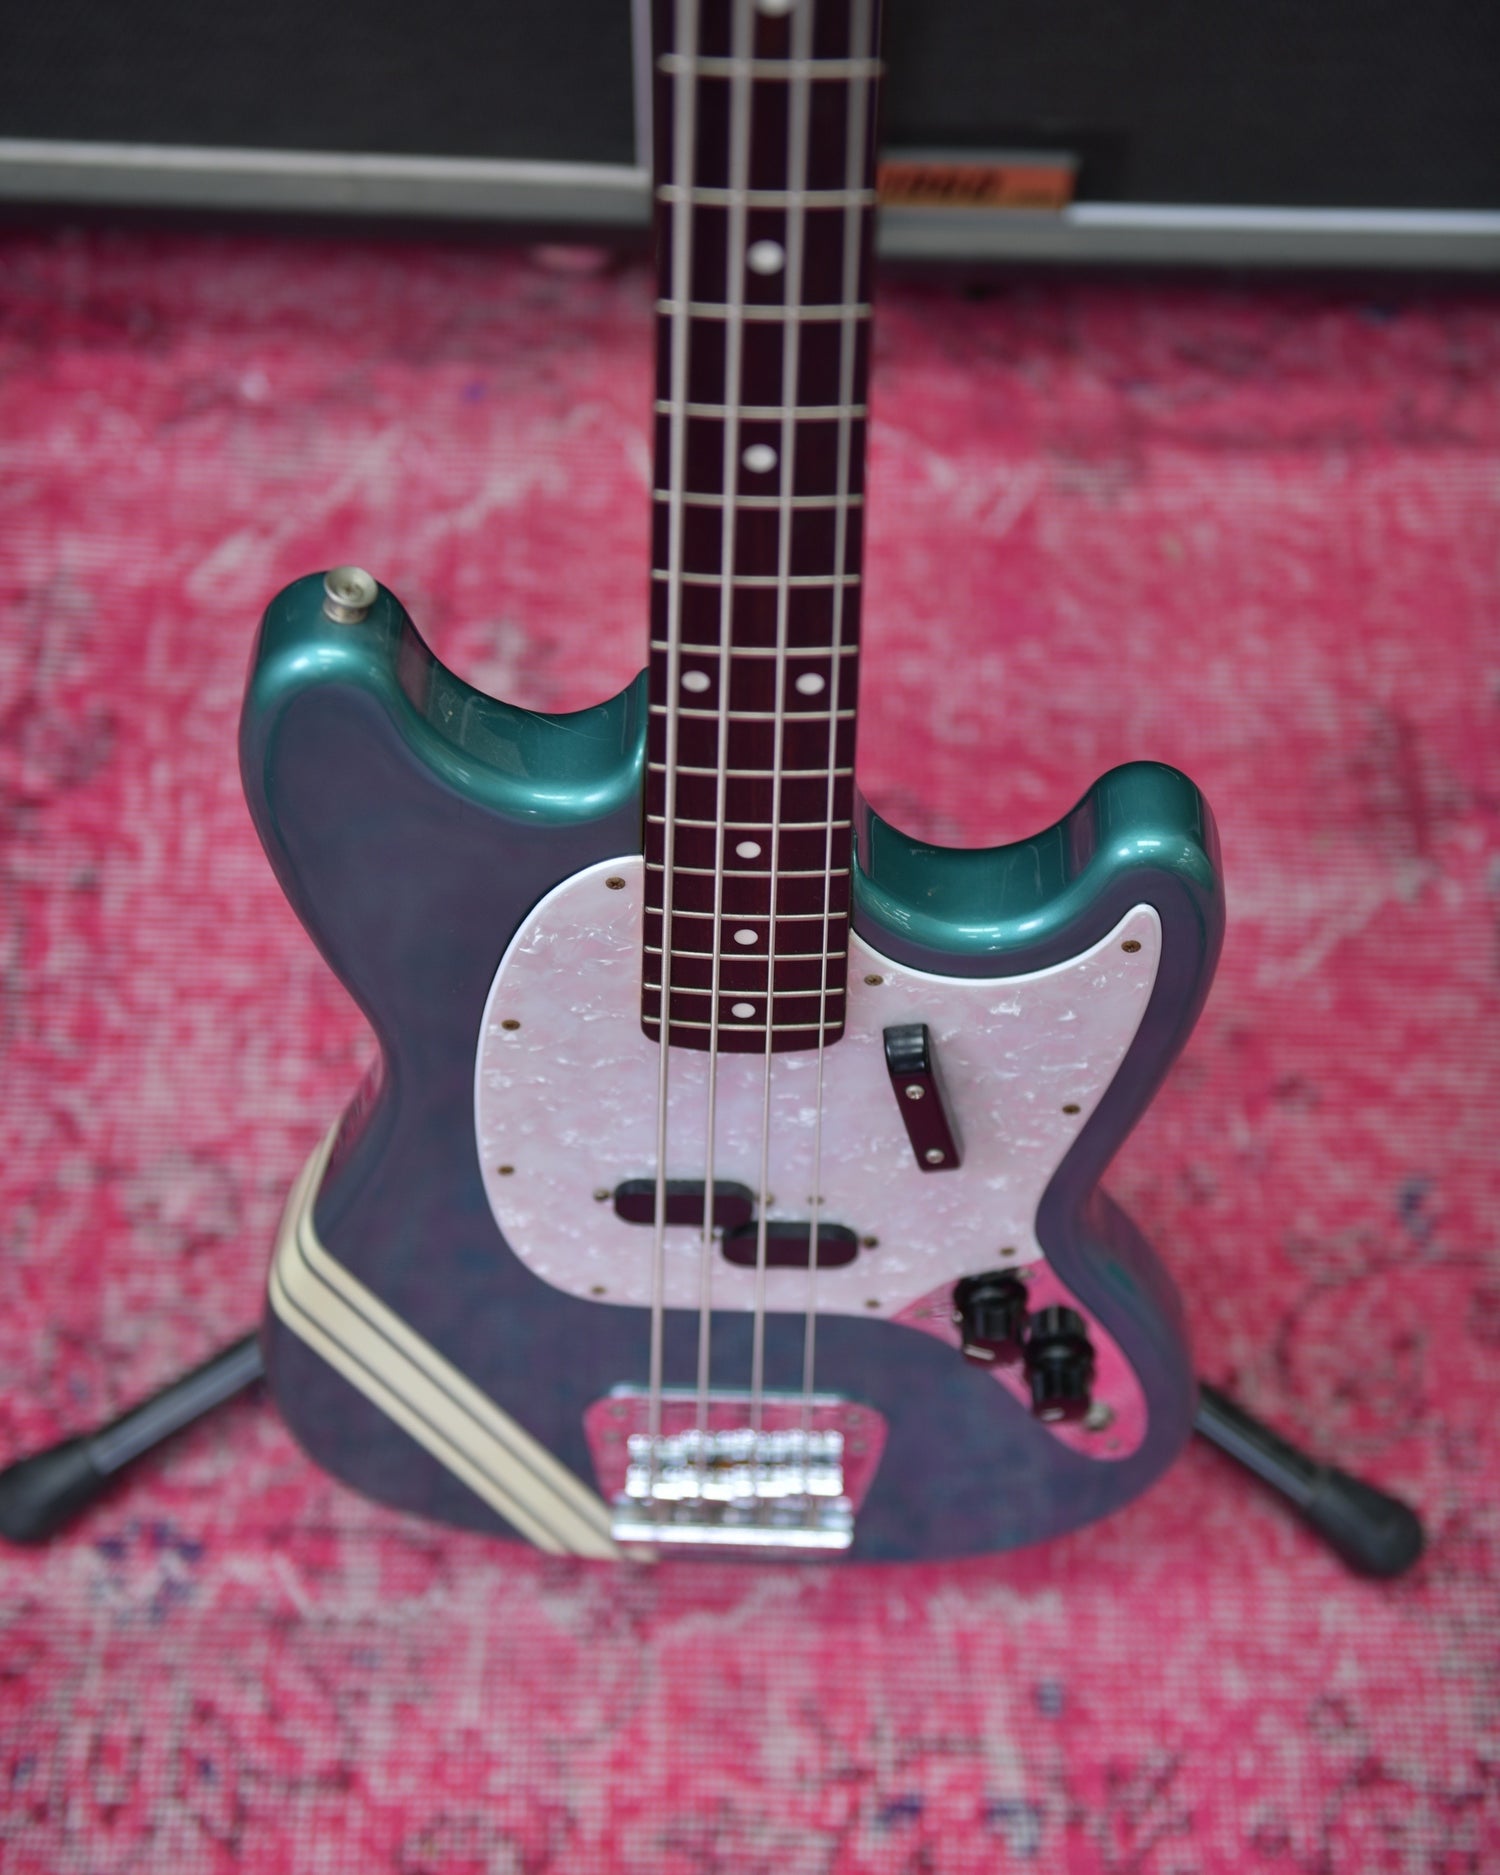 Fender Mustang Bass MB98 CIJ 1997 Ocean Turquoise Metallic